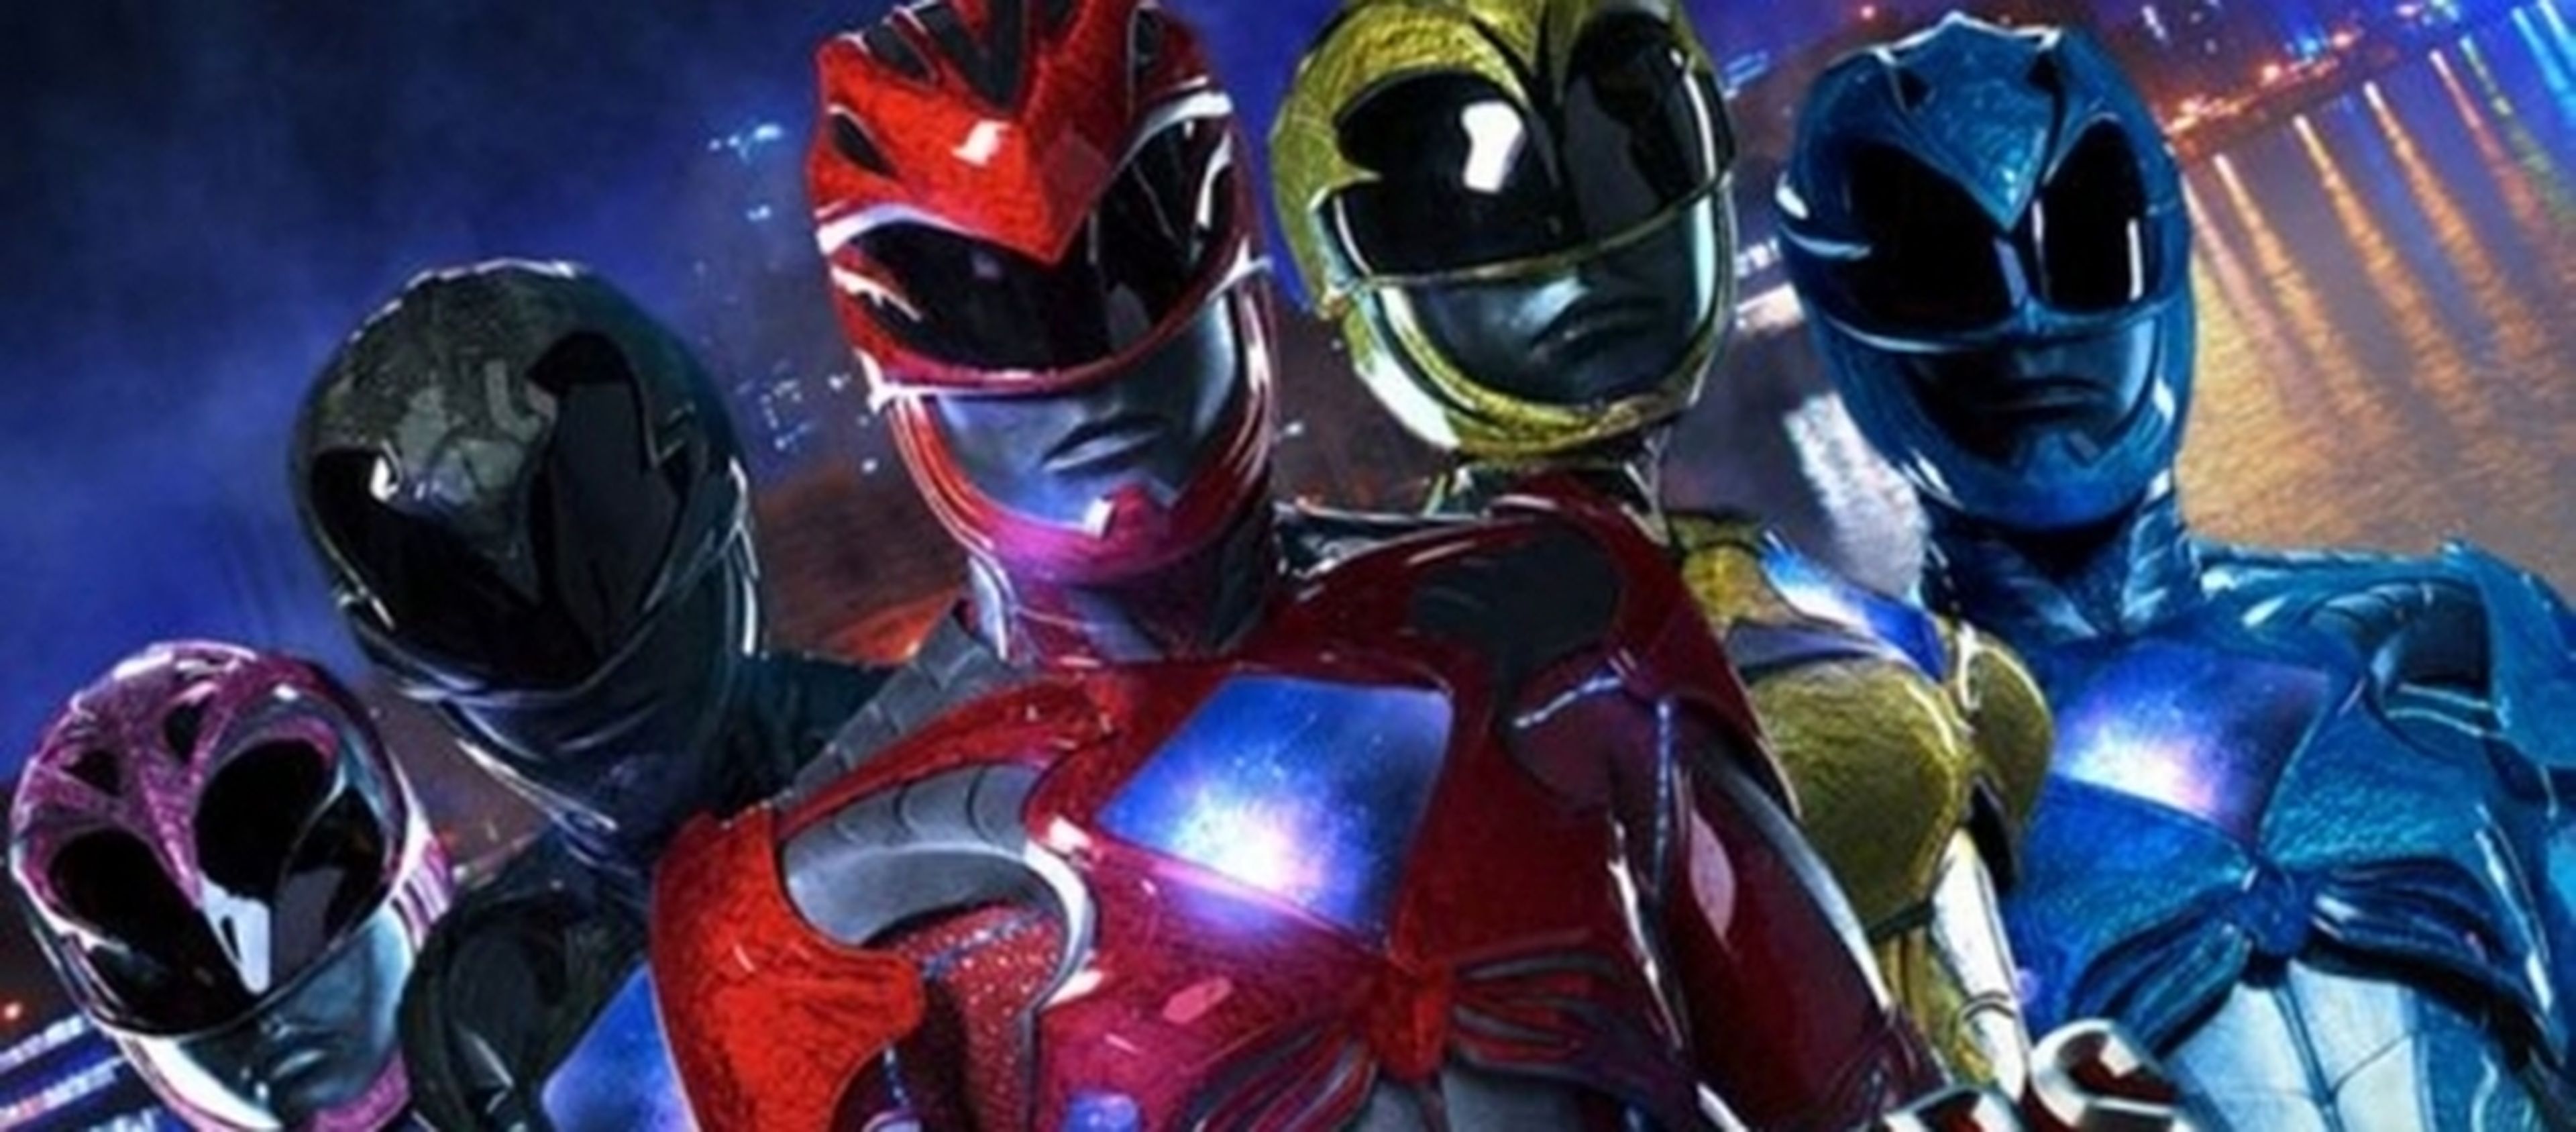 Power Rangers - Nuevo tráiler internacional: ¡A metamorfosearse!